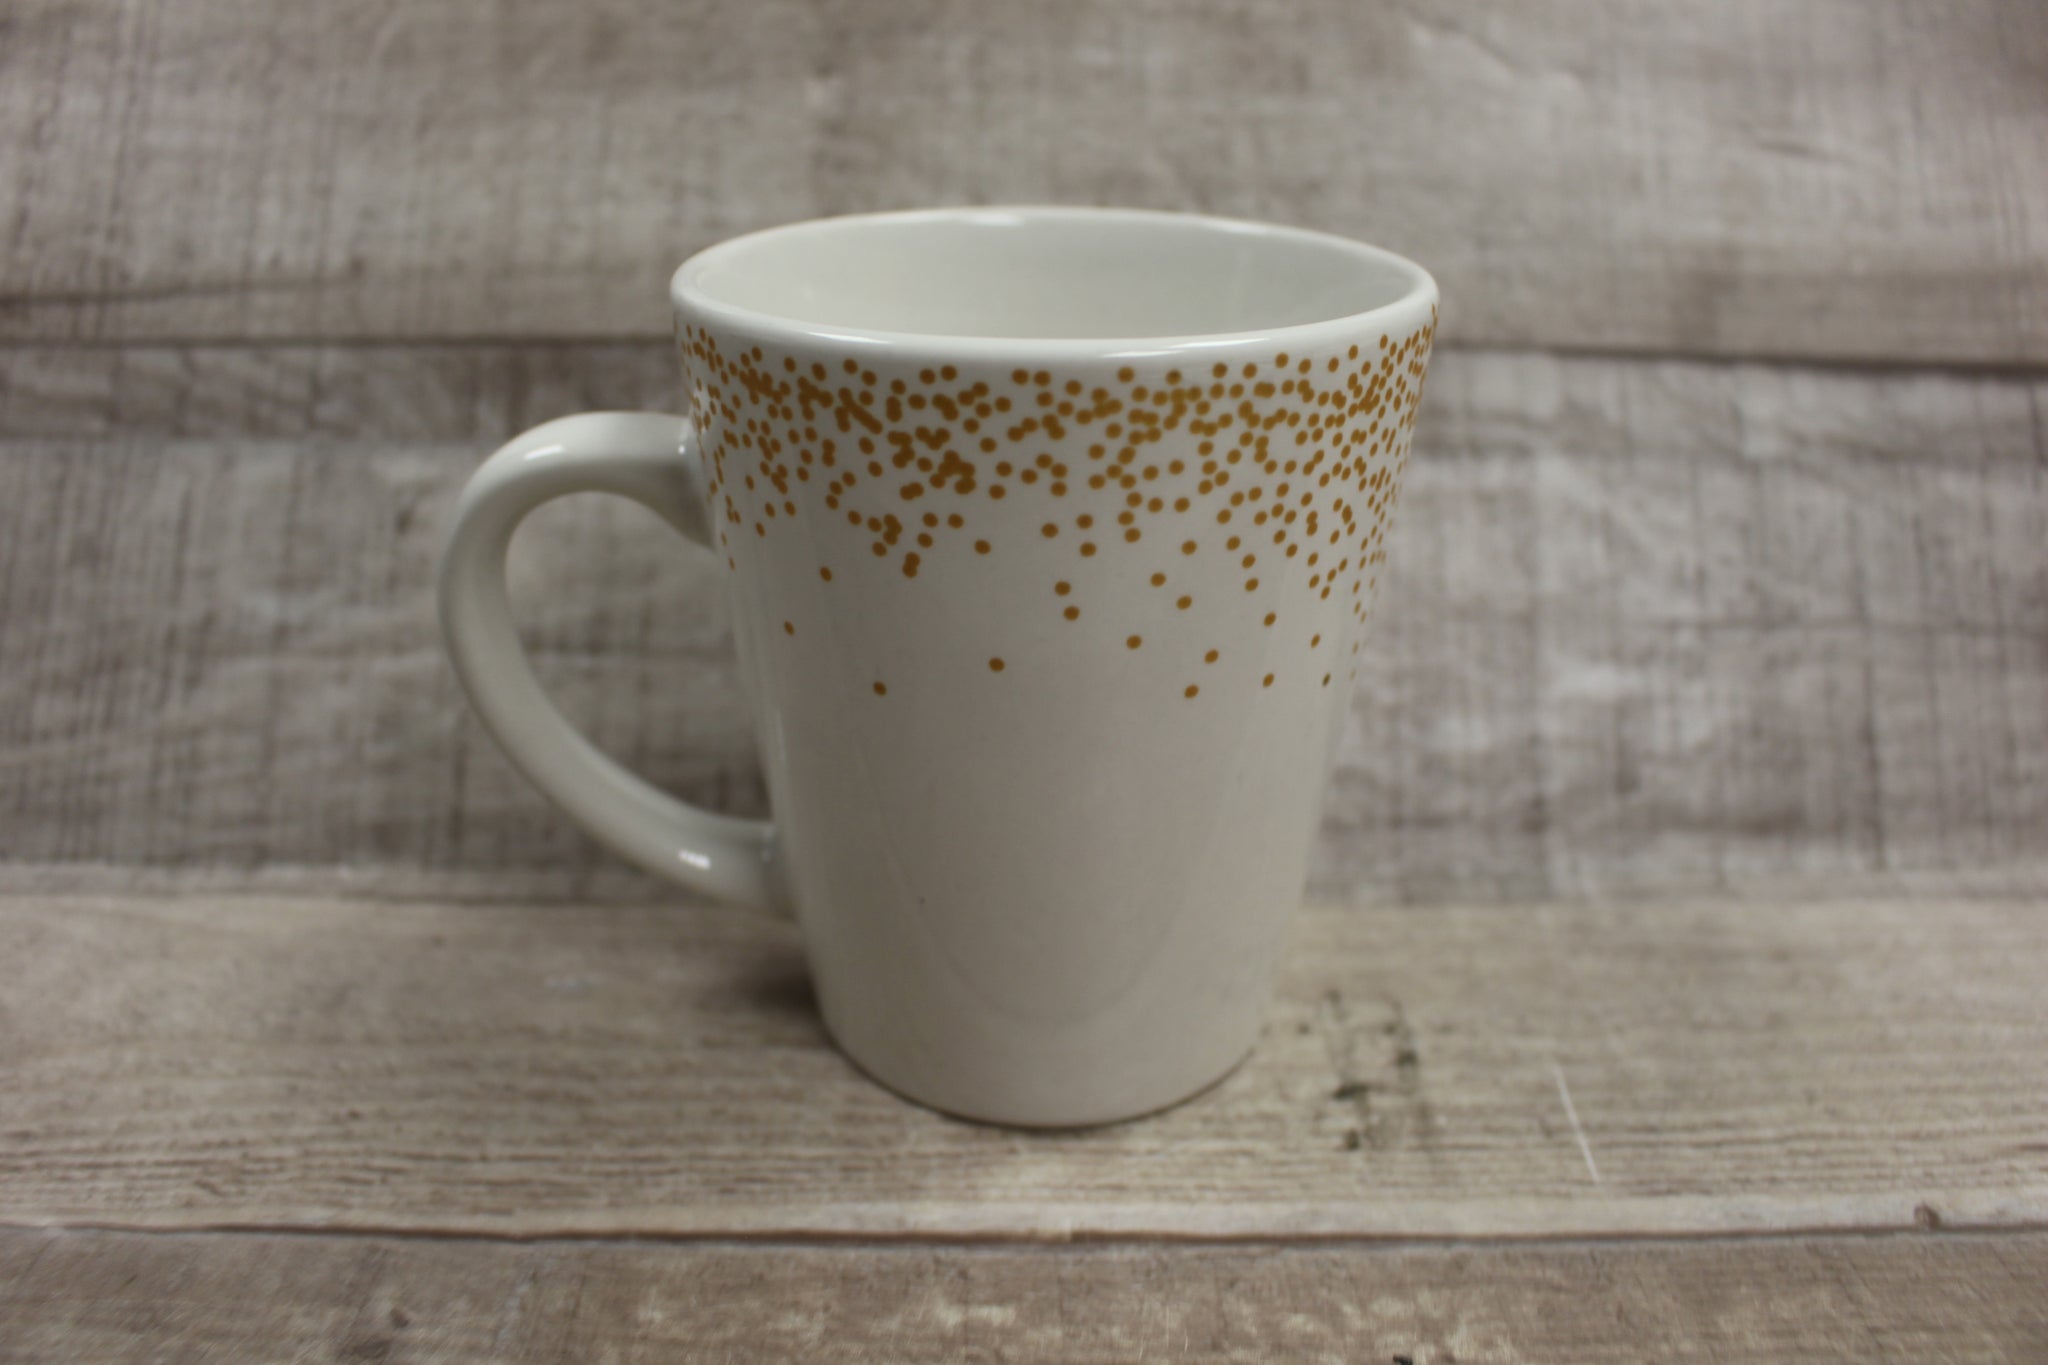 Georgia Coffee Mug Microwave and Dishwasher Safe C - Inspire Uplift